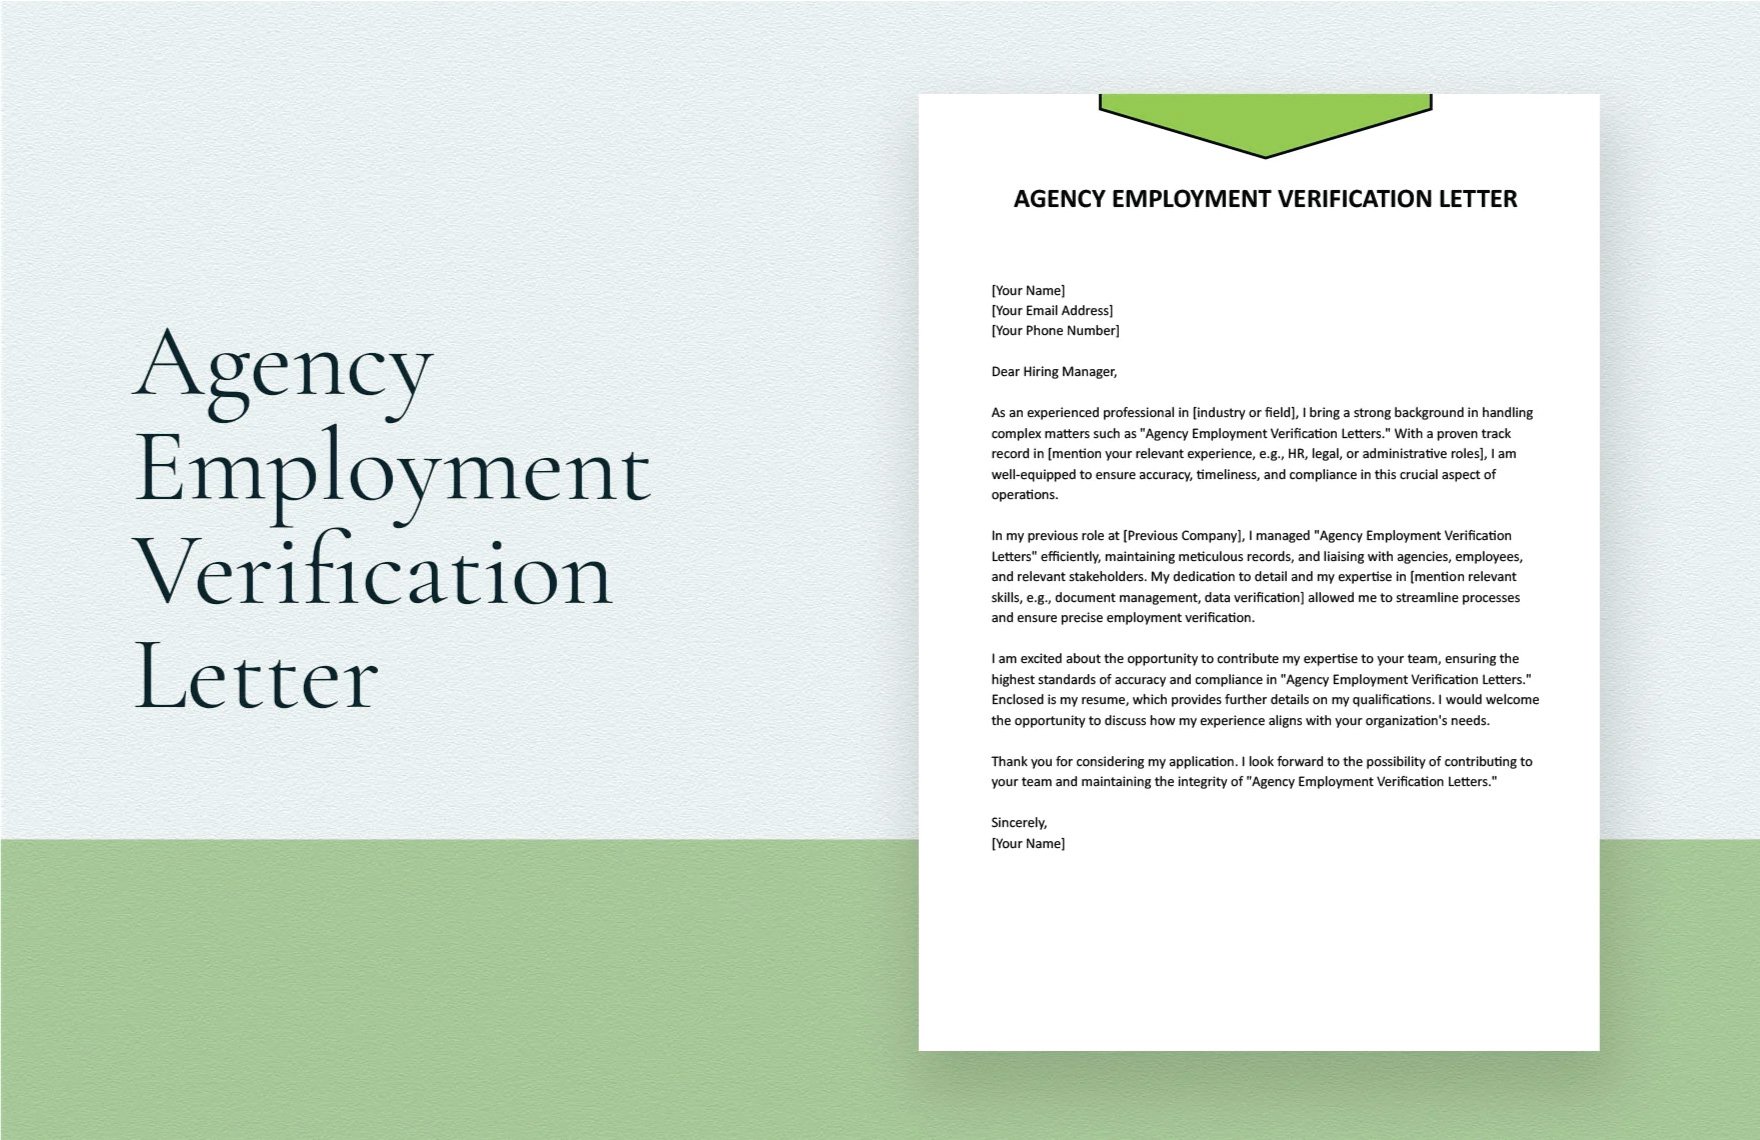 Agency Employment Verification Letter